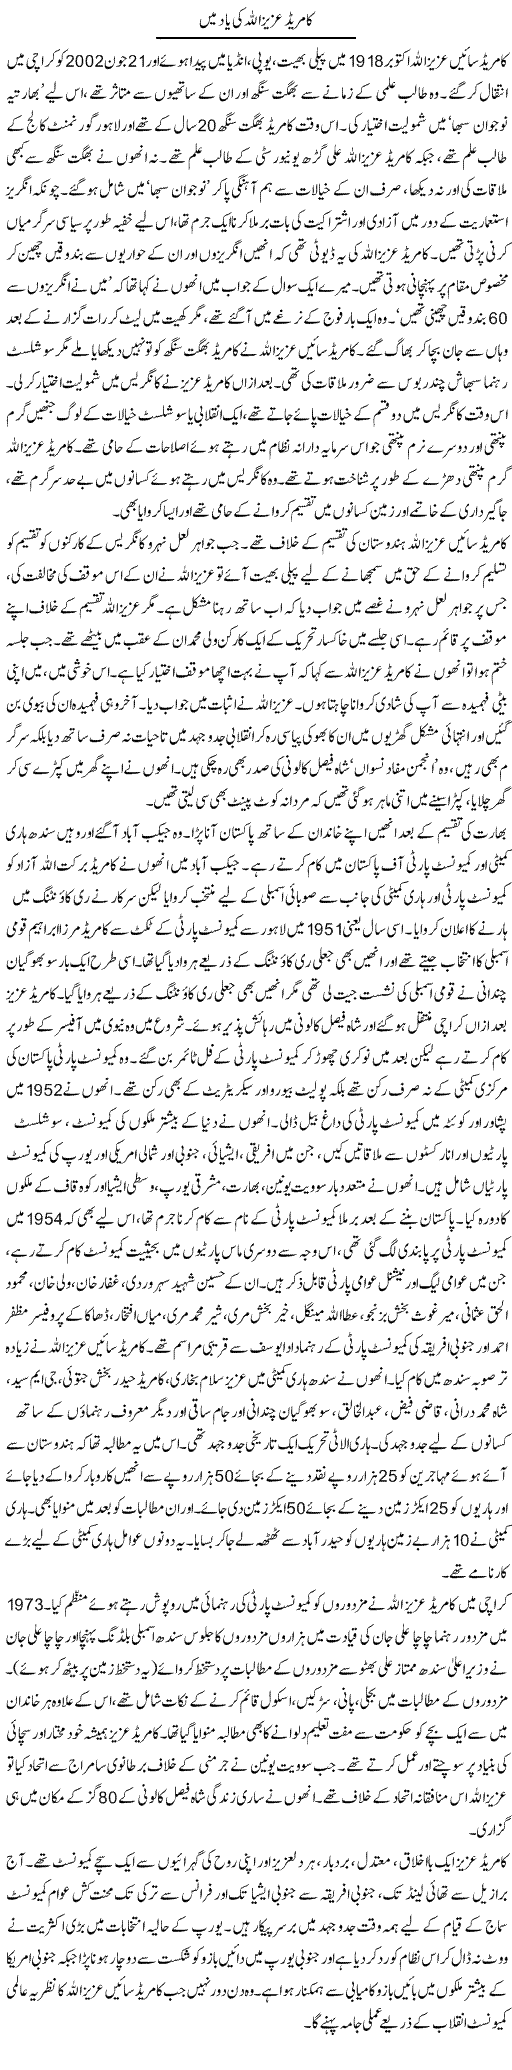 Comrade Aziz Ullah Ki Yad Main | Zubair Rehman | Daily Urdu Columns